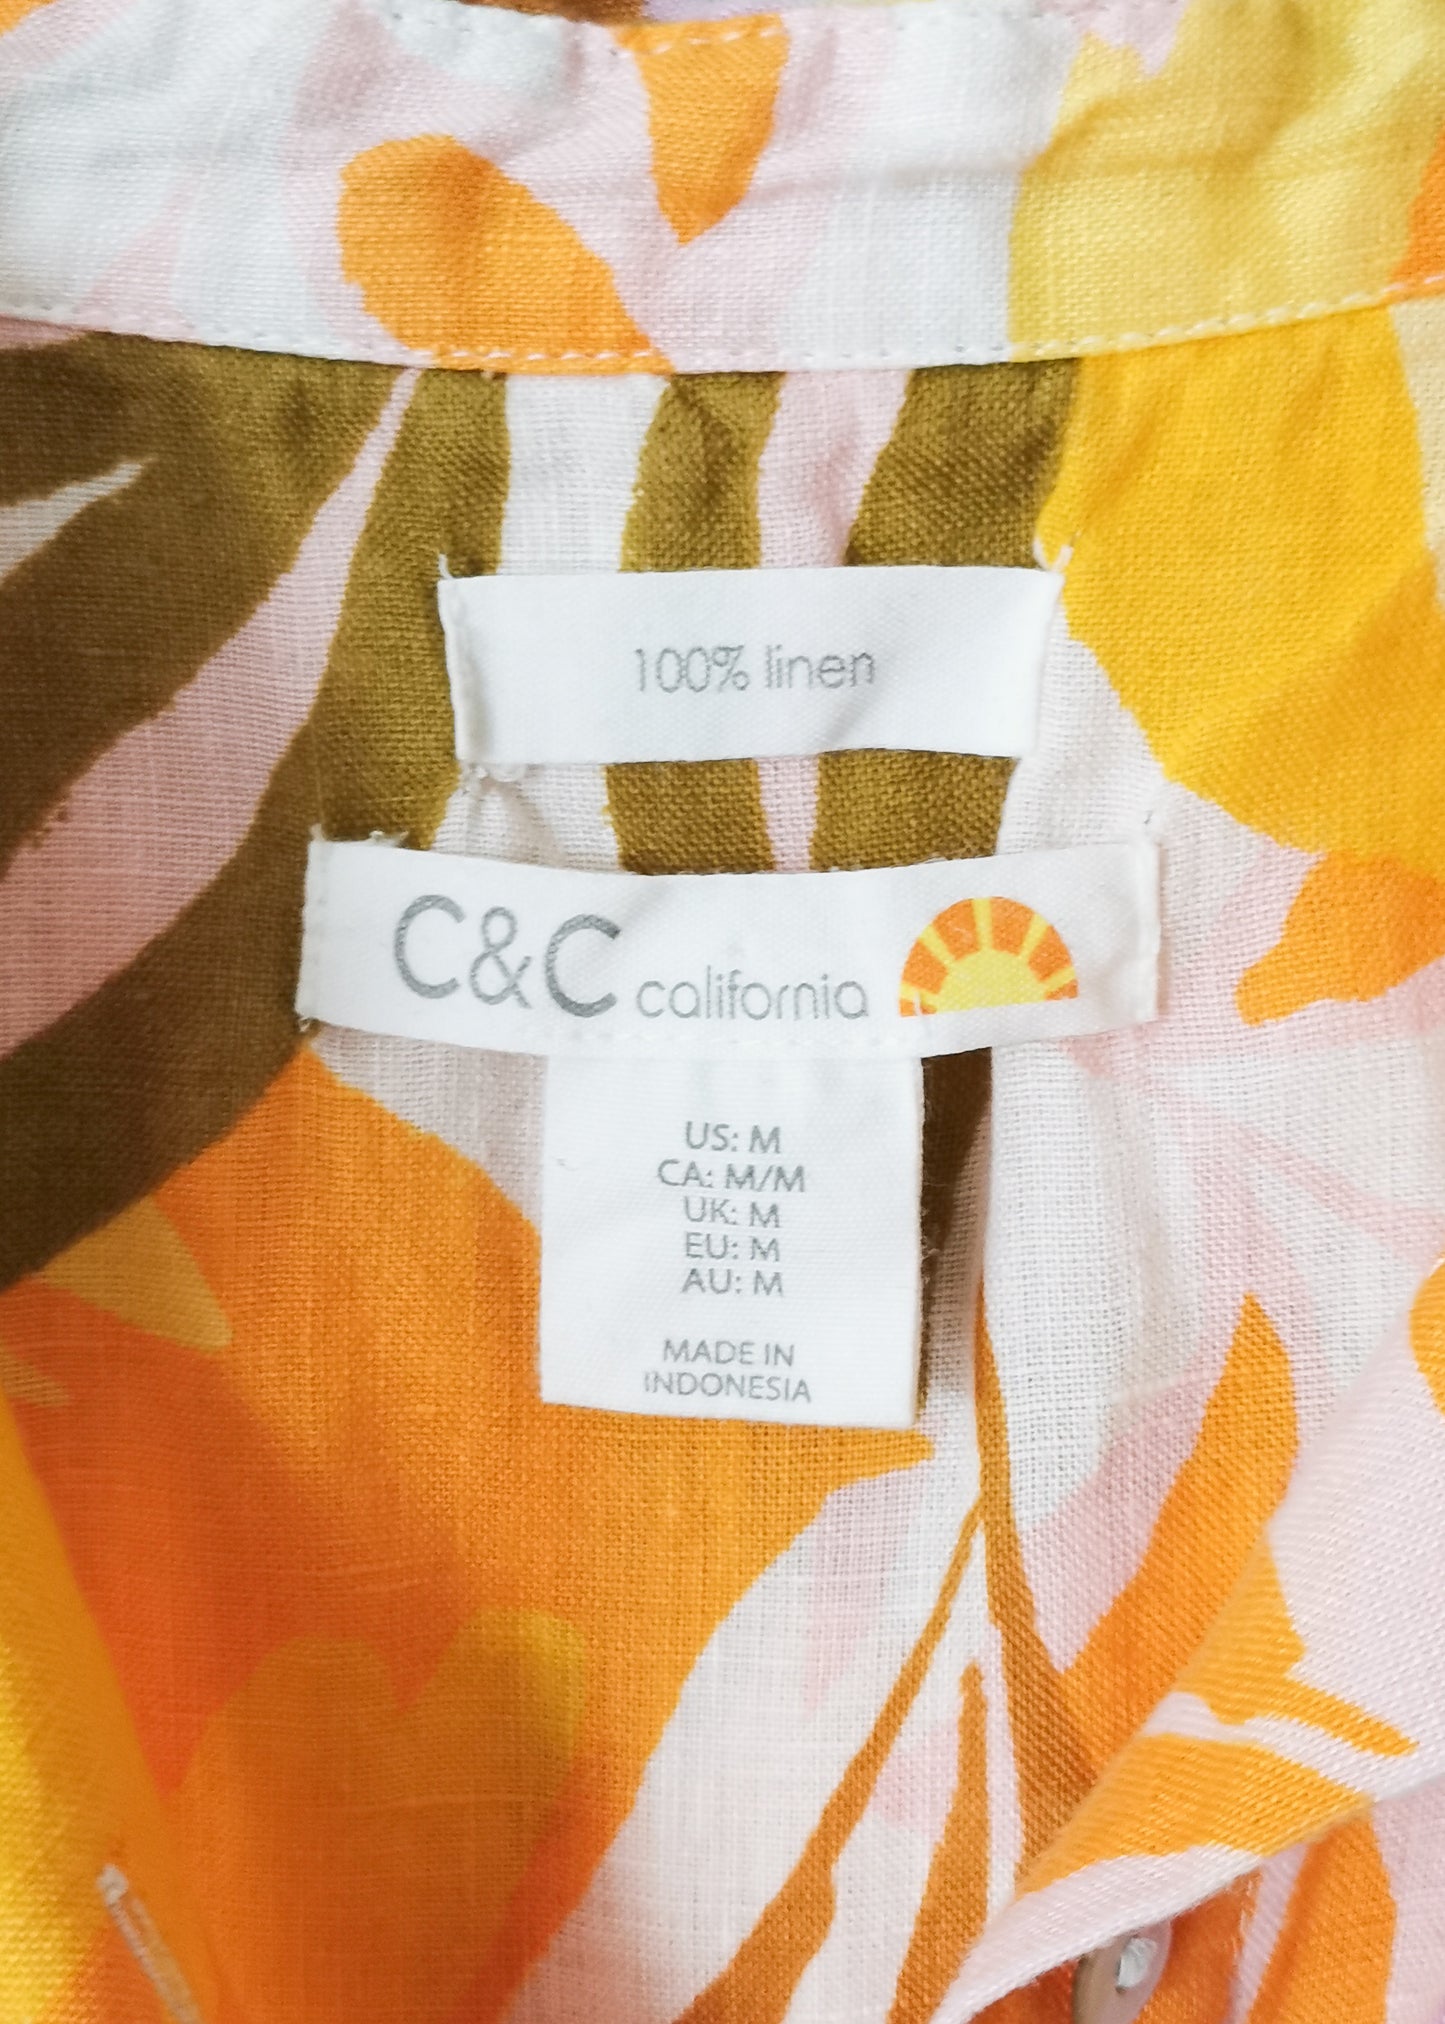 C&C California Linen Shirt (M)